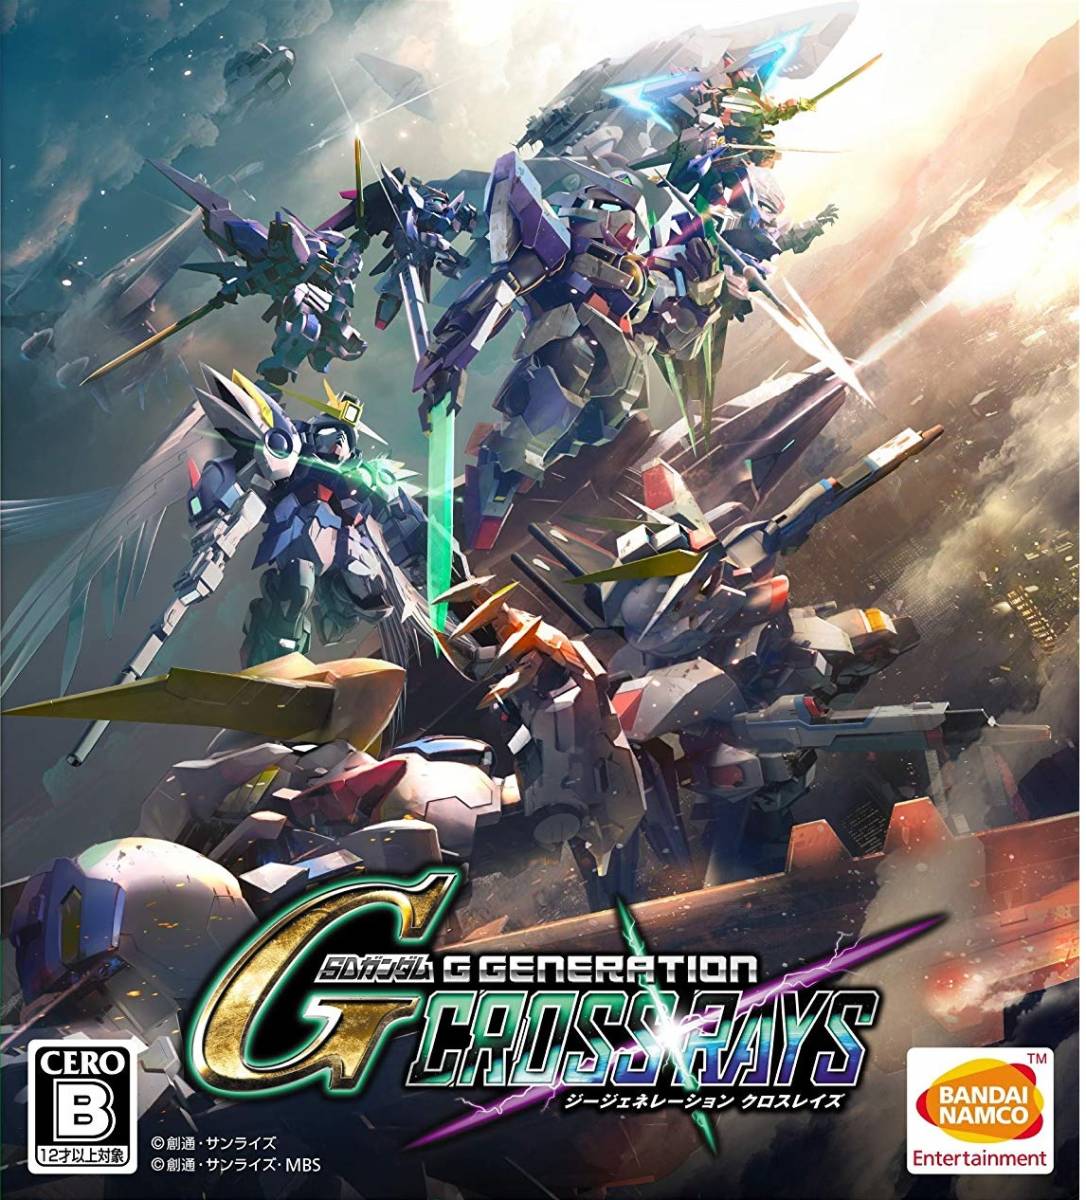 SD Gundam G Generation Cross Rays SD Gundam ji- generation Cross Rays PC Steam код японский язык возможно 